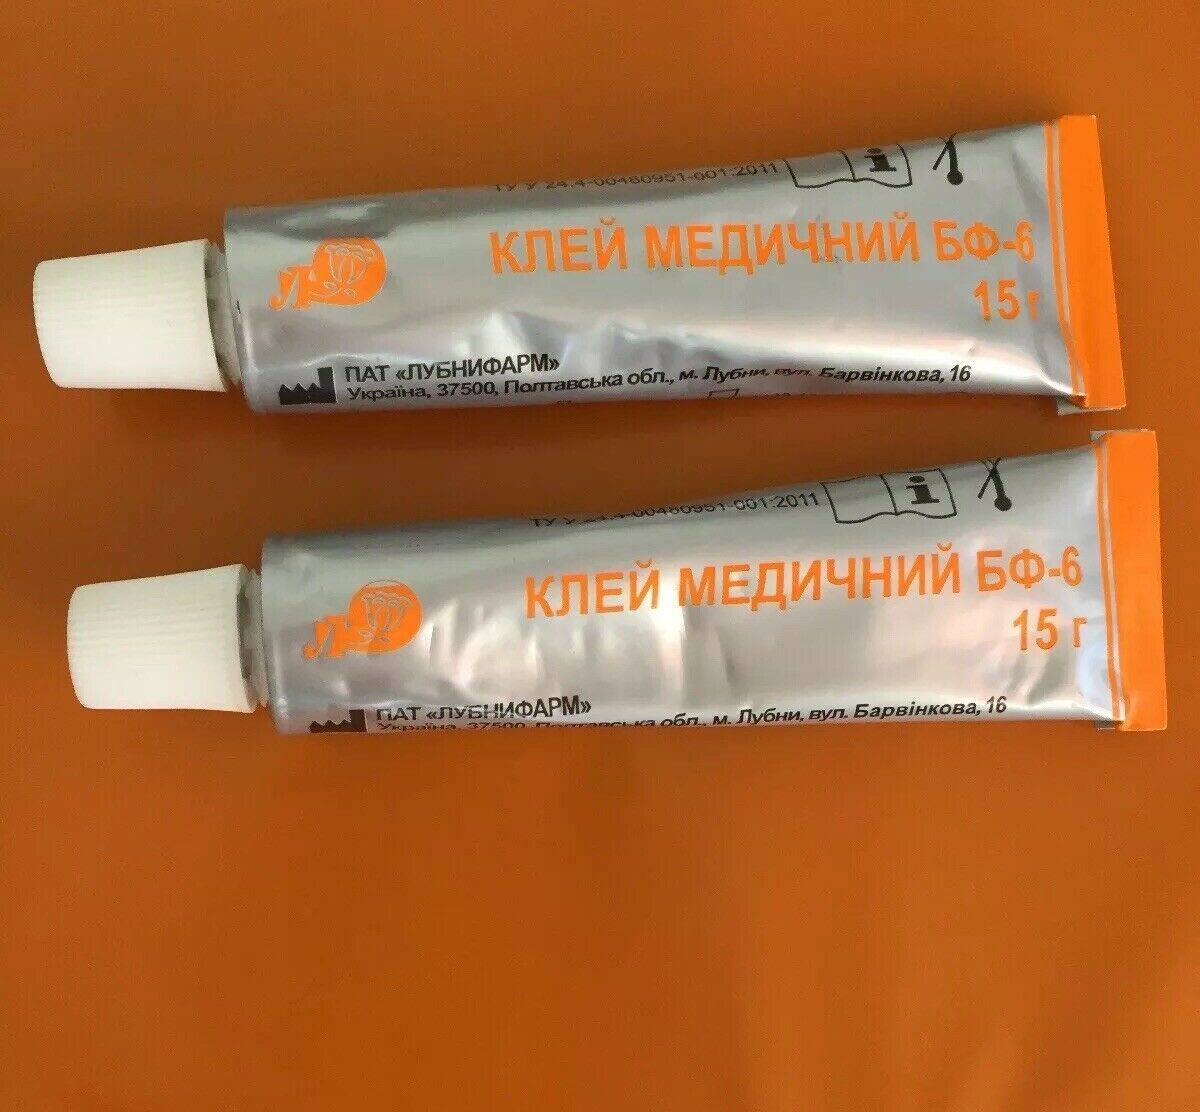 Body-Skin-Glue-BF-6-Medical-Adhesive-Liquid-Band-aid ktmart.vn 2